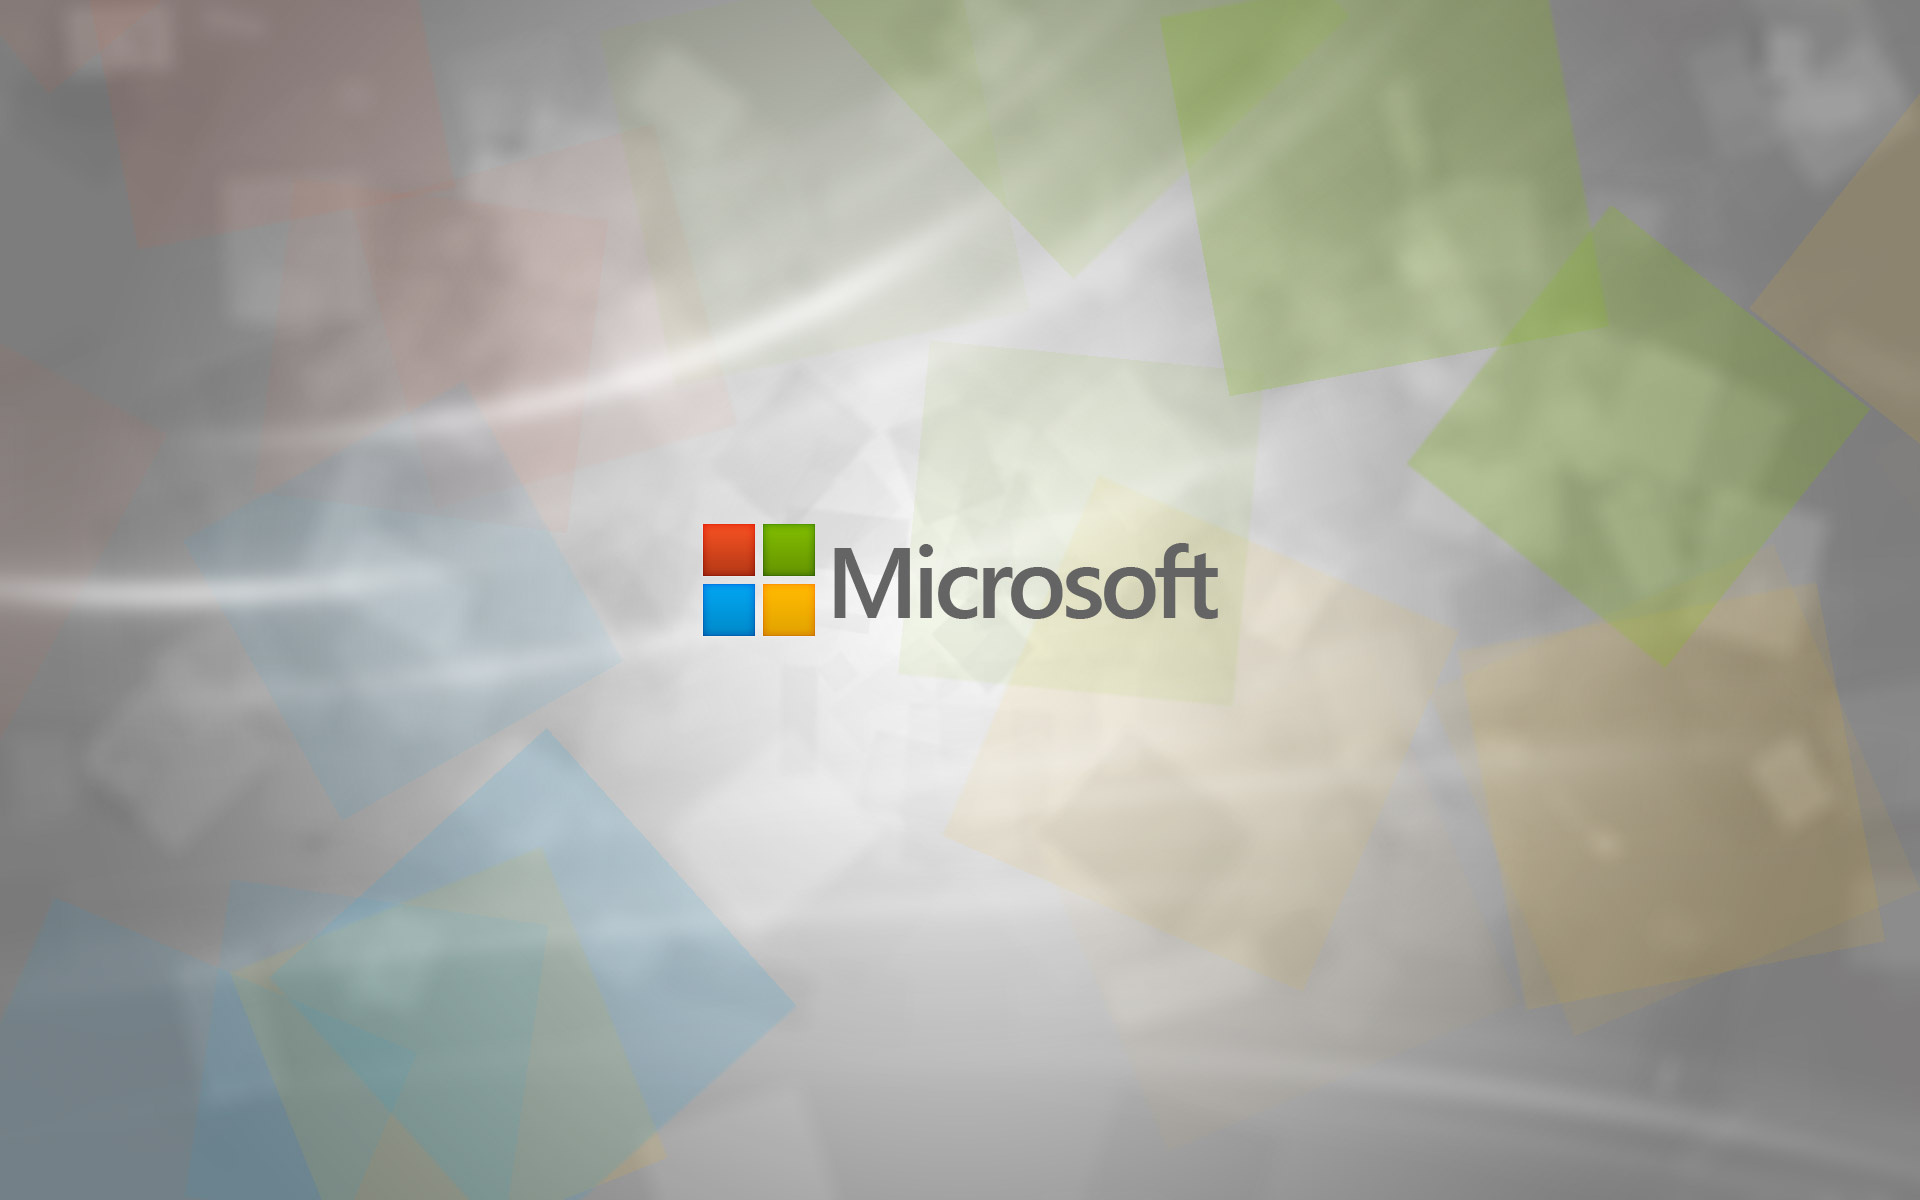 Microsoft: MS-Office suite, Internet Explorer, Edge web browser, Surface lineup. 1920x1200 HD Wallpaper.